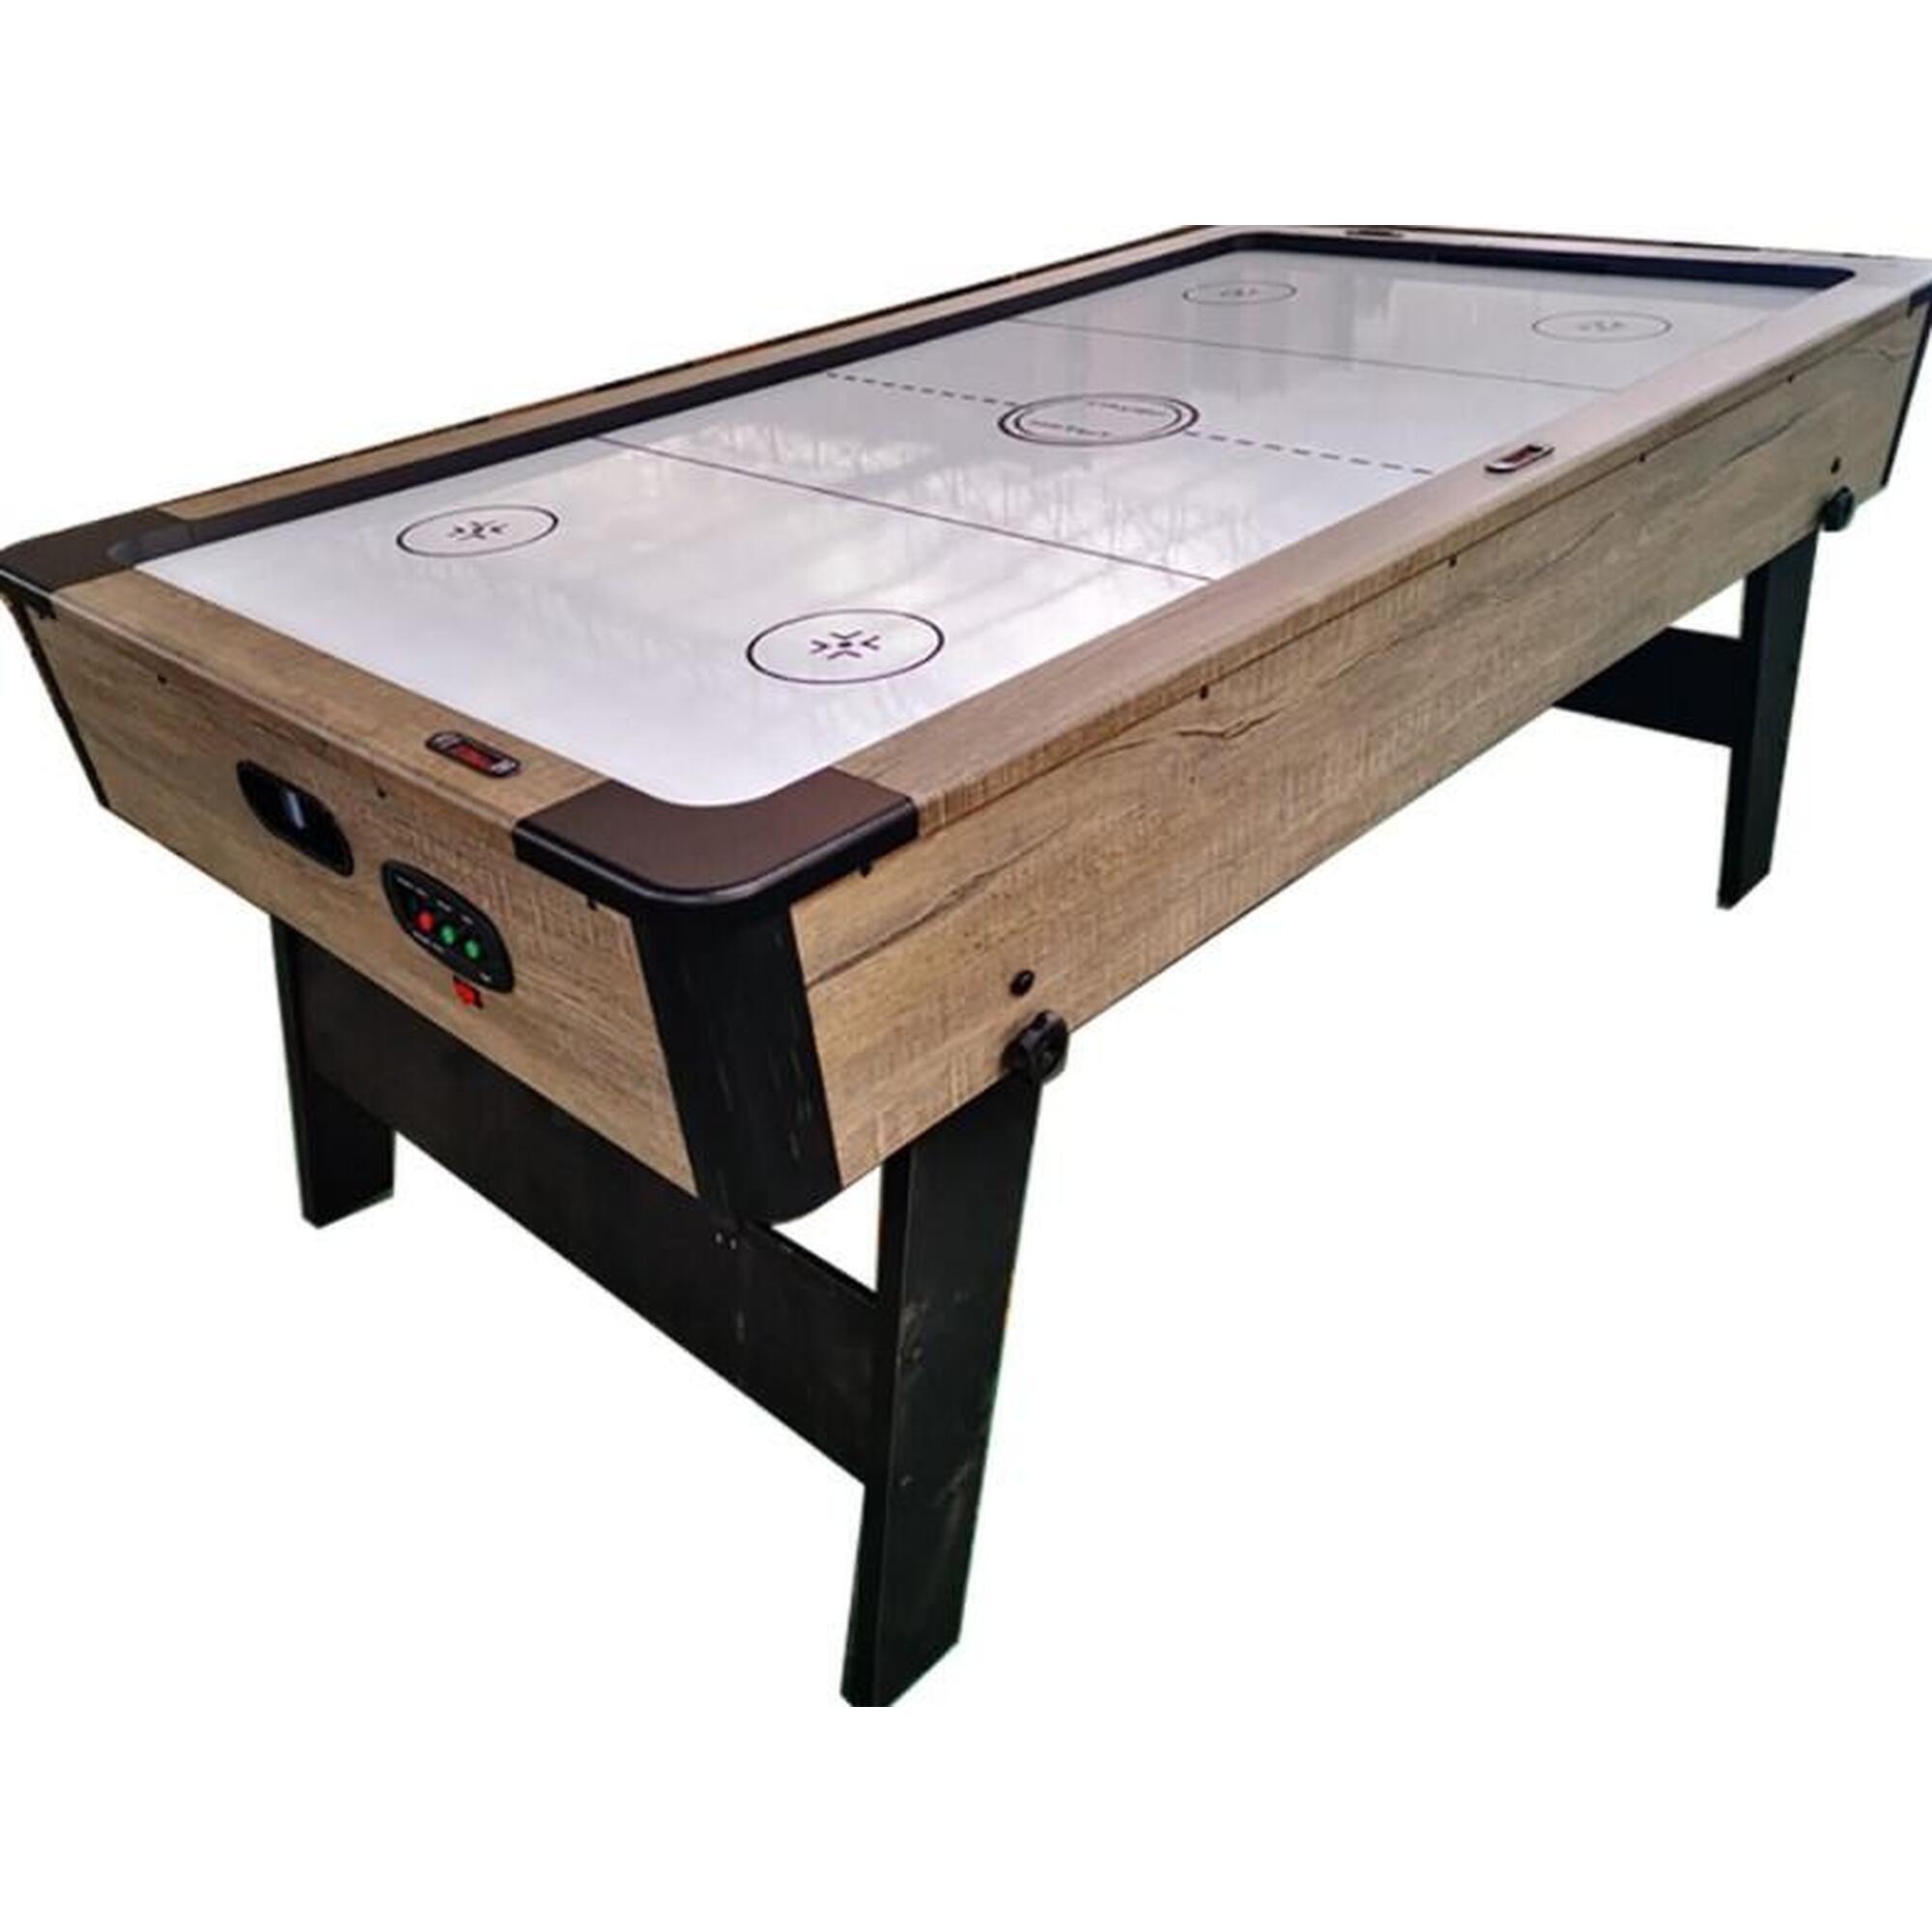 North Air hockey table Foldy Wood (folding) 6.5FT